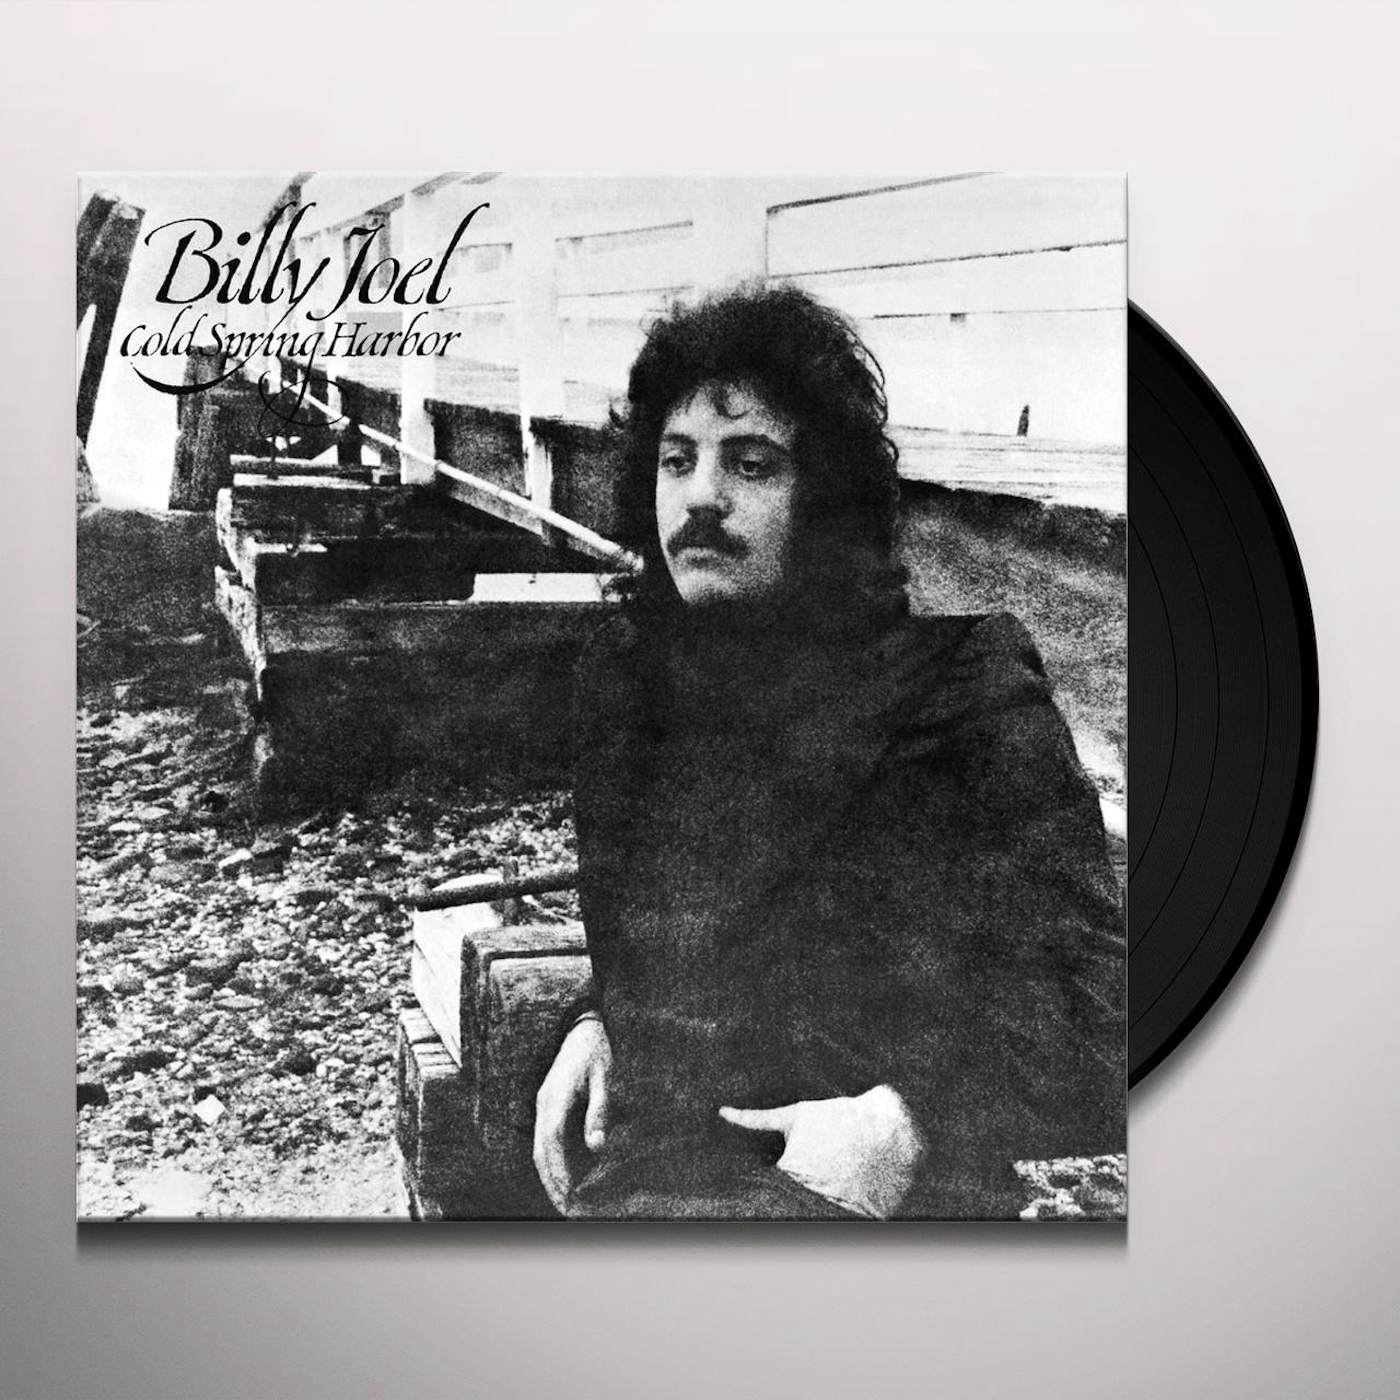 Billy Joel Cold Spring Harbor Vinyl Record